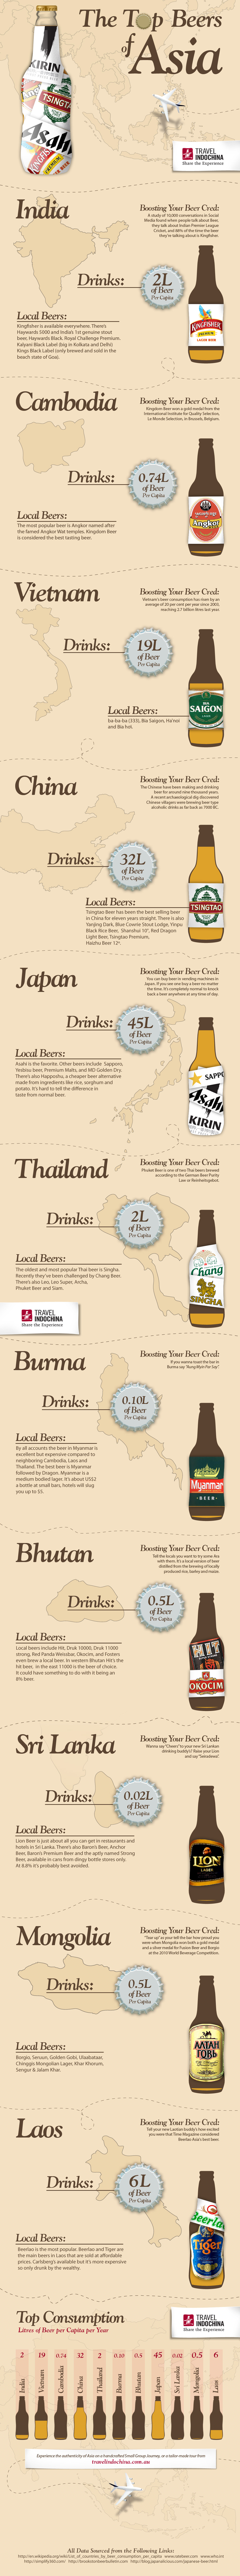 Top Beers in Asia 